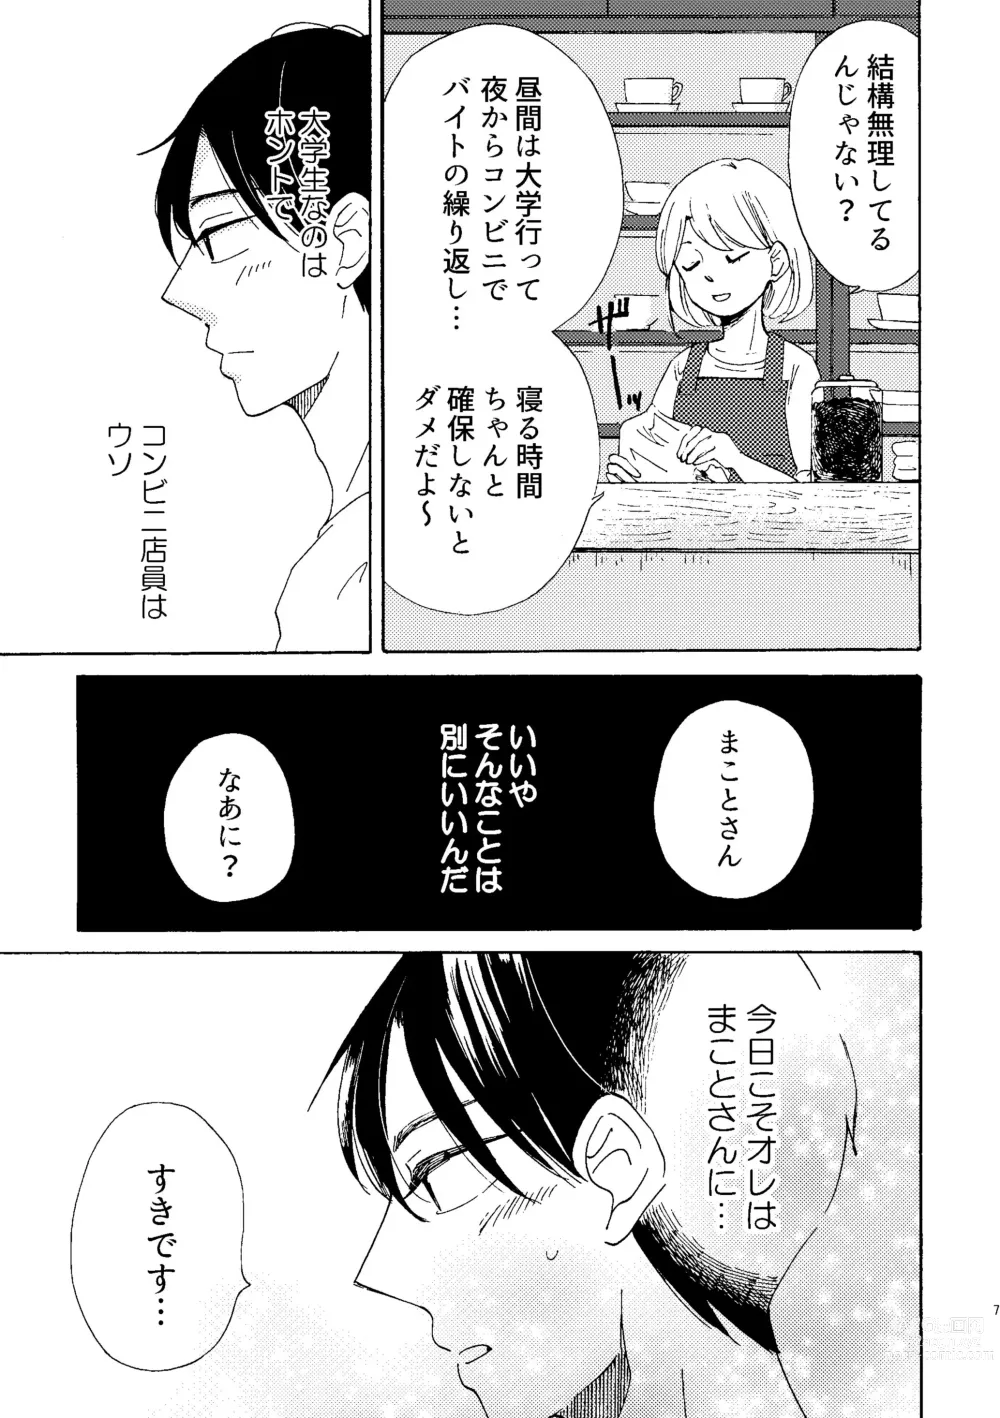 Page 7 of doujinshi Aoi-kun no Koi